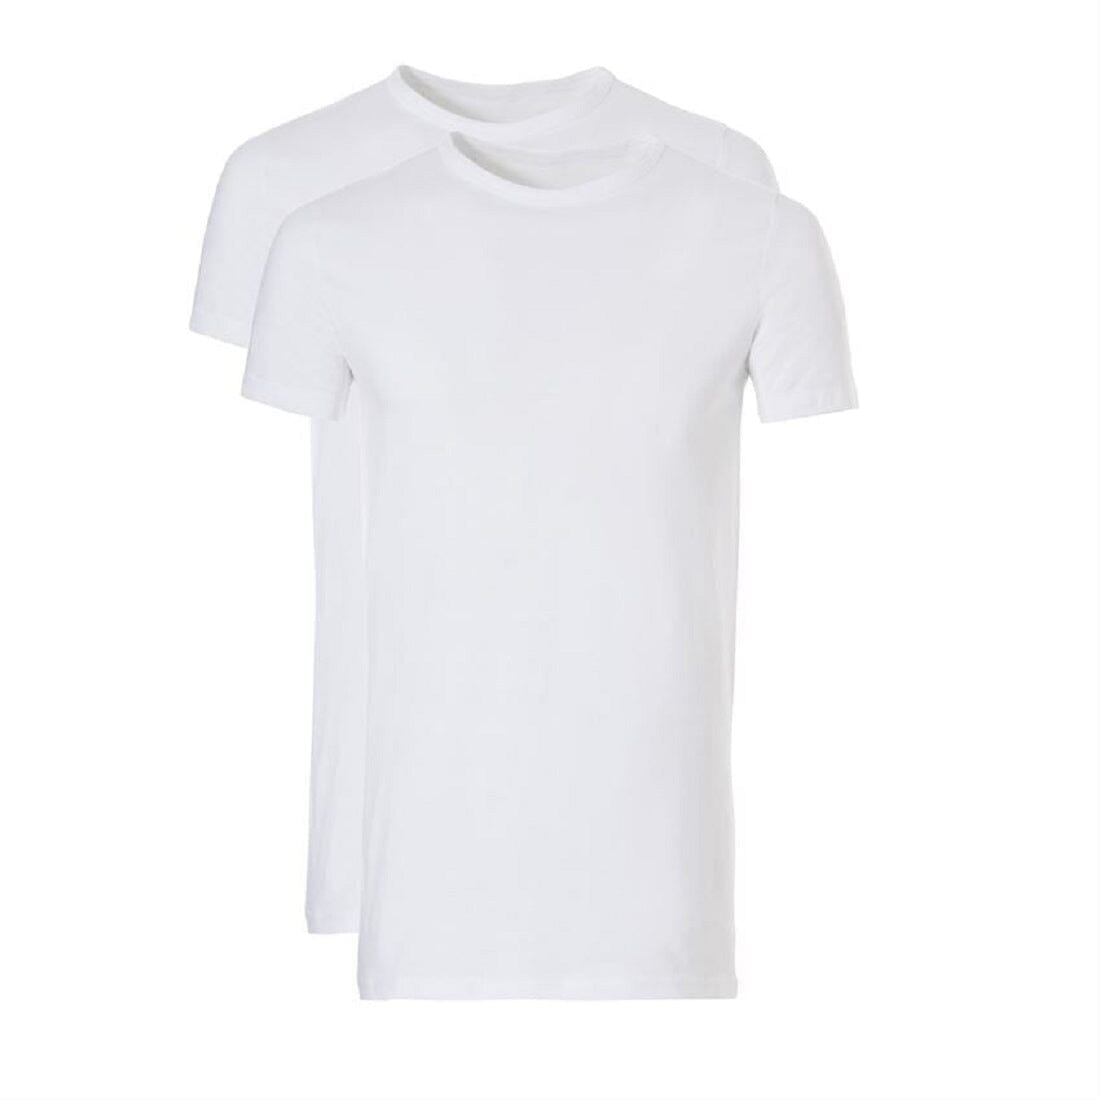 Ten Cate - 30868 - Basic T-Shirt 2-pack - White Shirt Ten Cate 